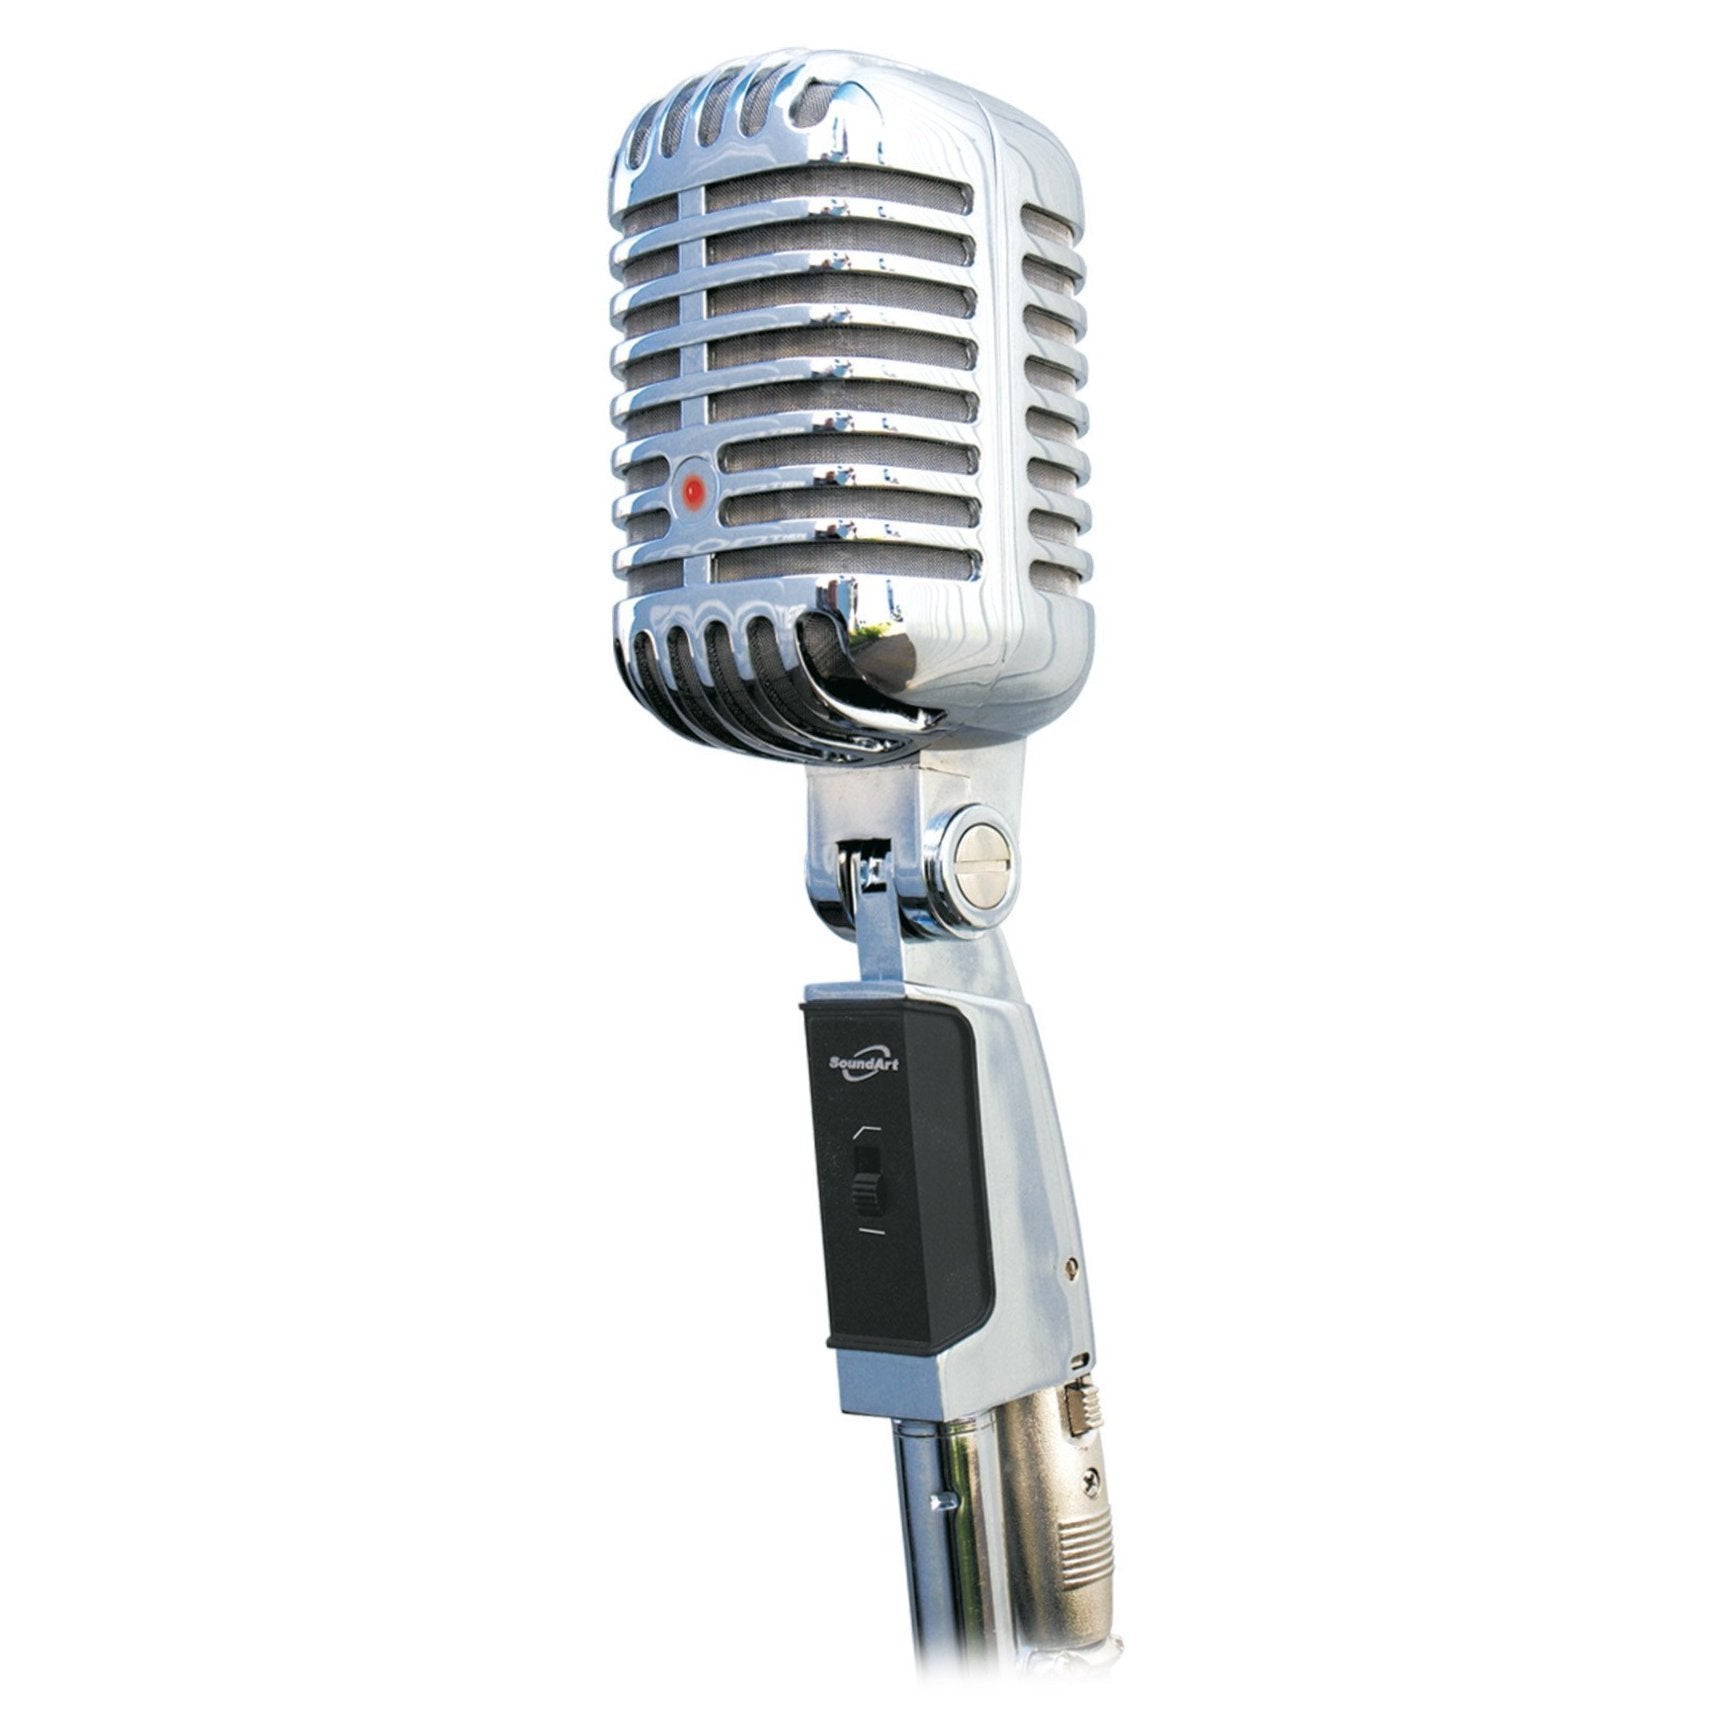 SoundArt 'Vintage' Condenser Microphone with Deluxe Carry Case (Chrome)-SGM-V50C-CHR